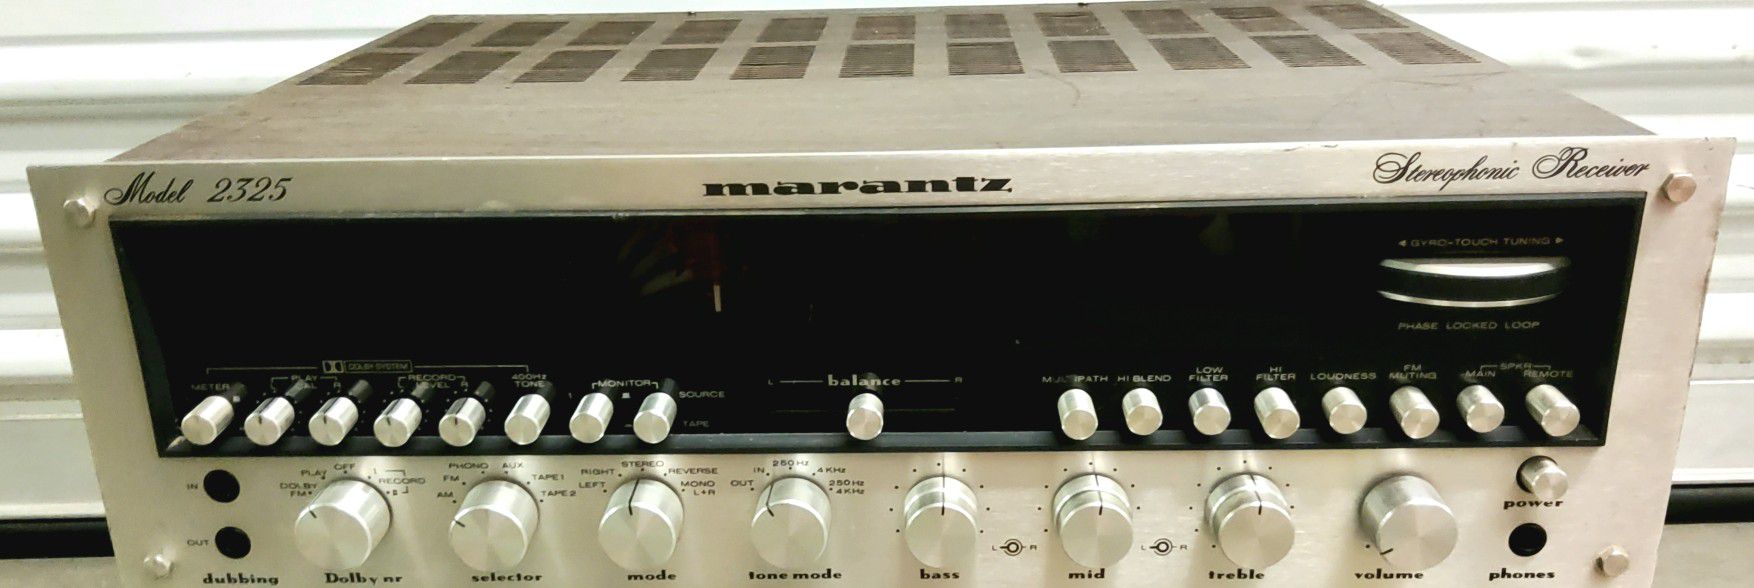 Vintage mid 70s Marantz 2325 125 Watt home stereo receiver.